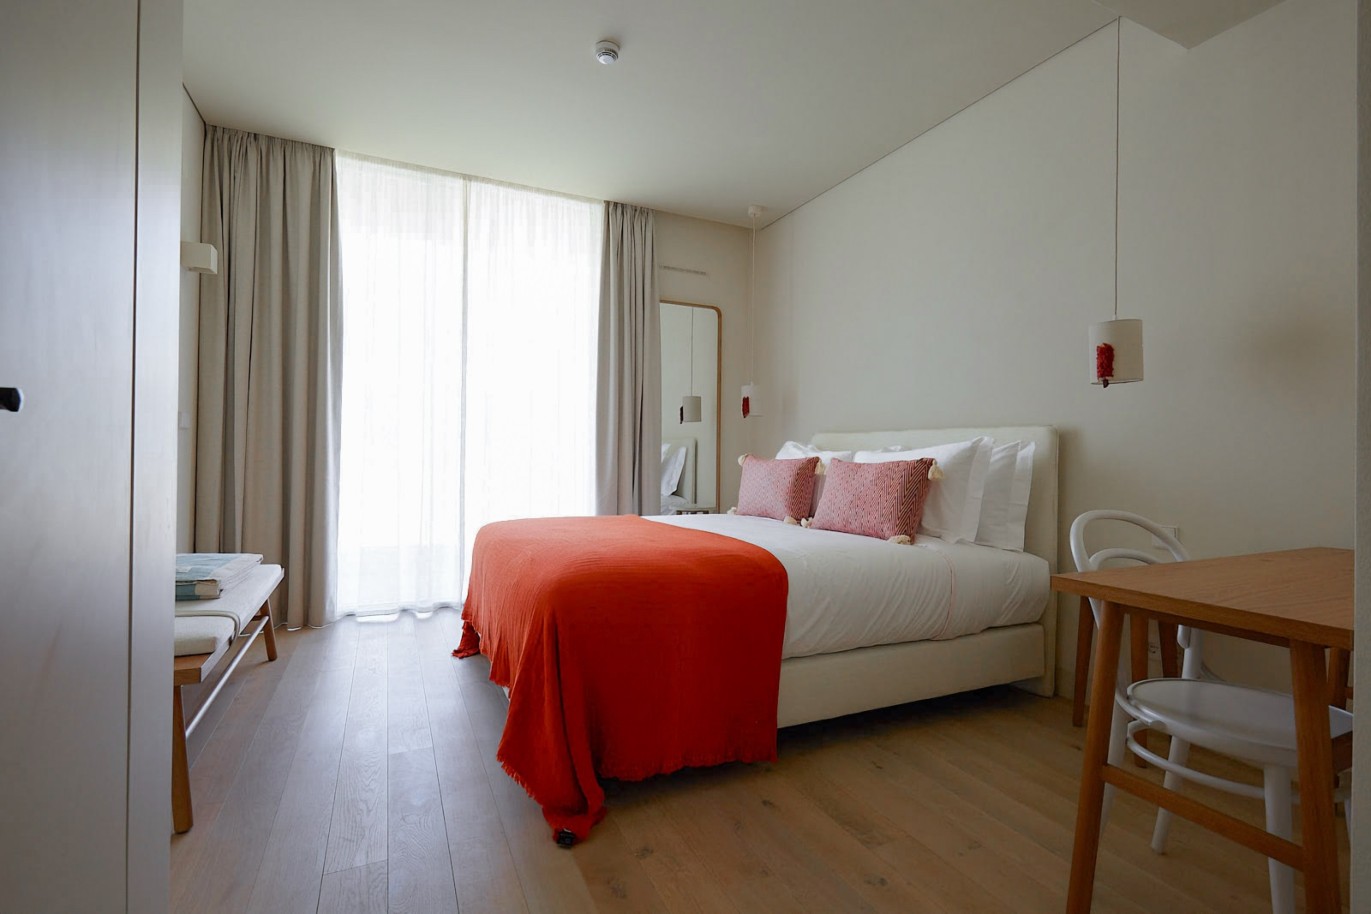 2 bedroom apartment in resort, for sale in Porches, Algarve_228698